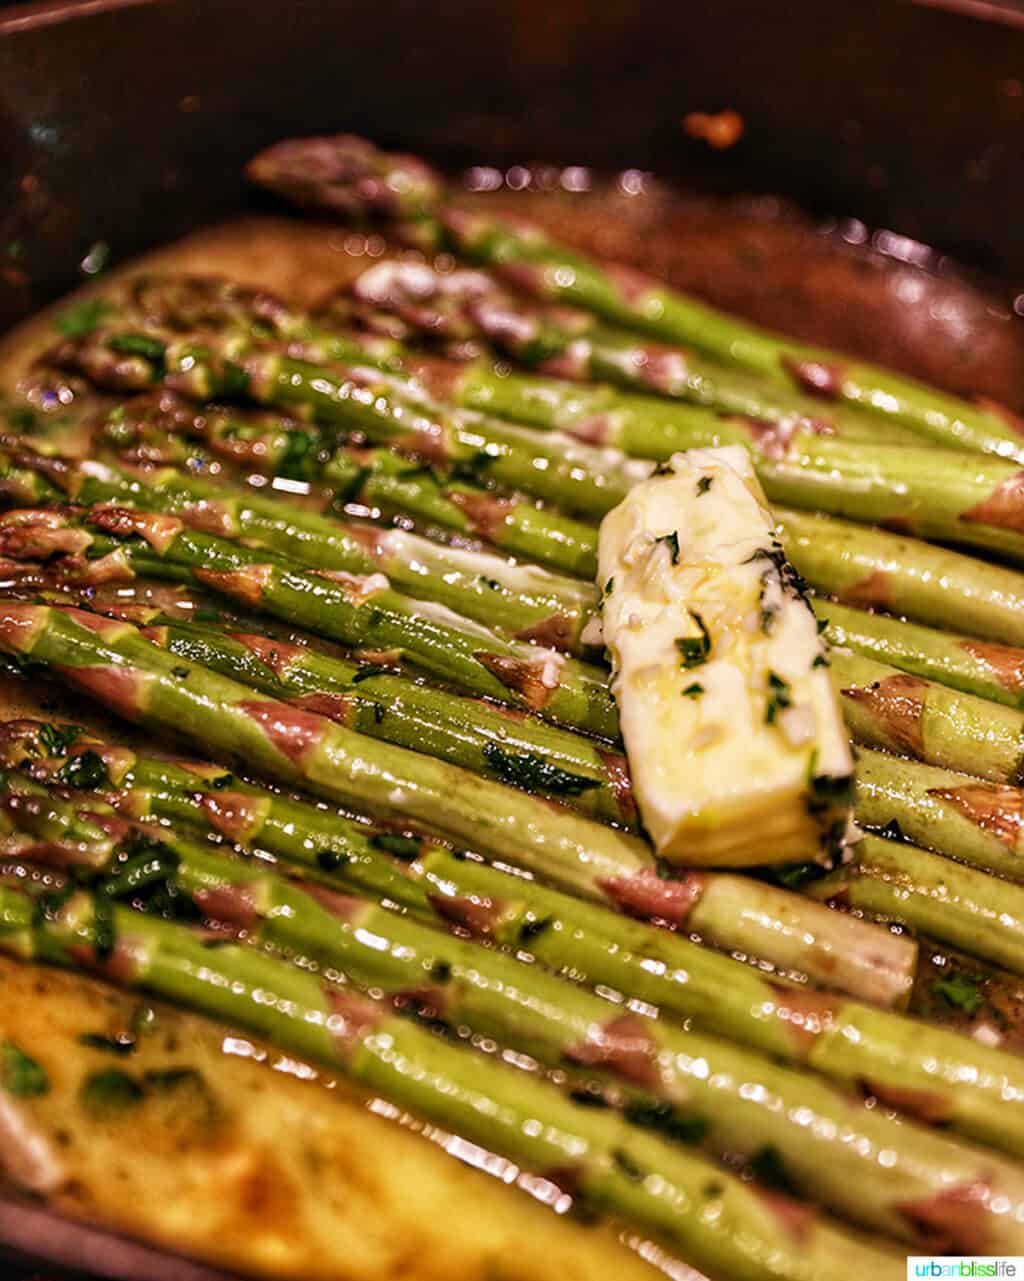 butter on asparagus